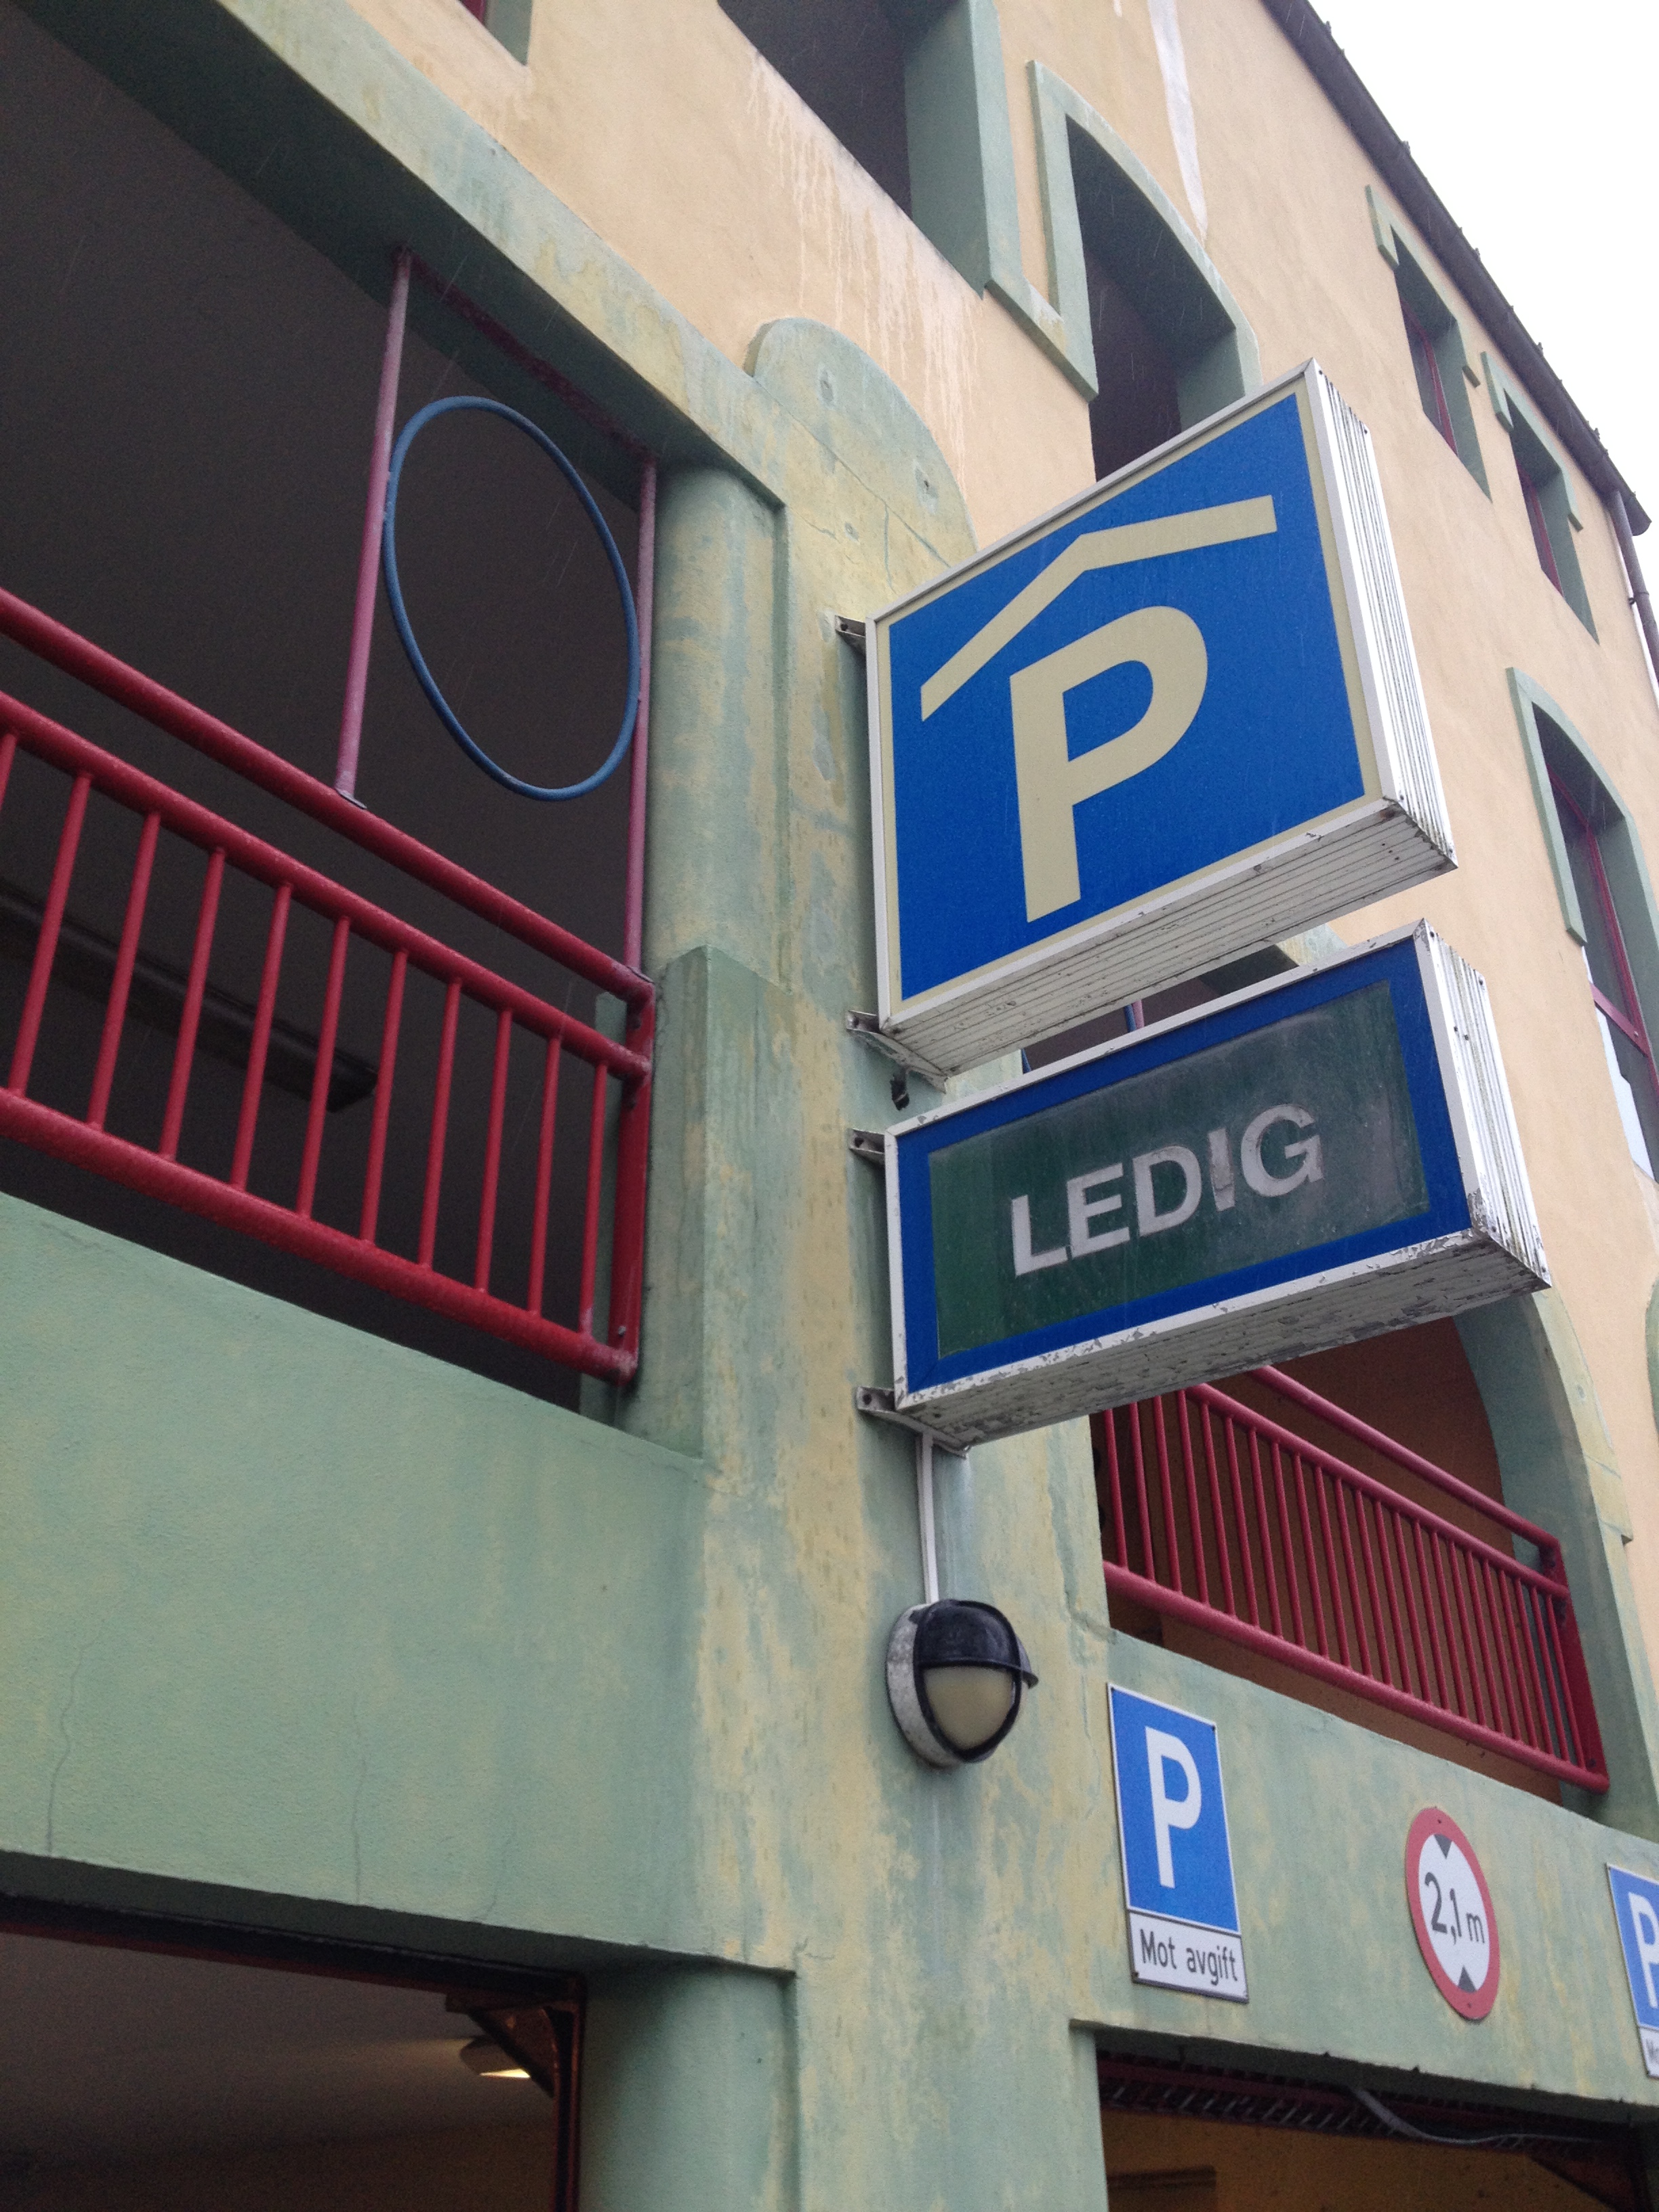 Parking garage sign in Oslo, Norway